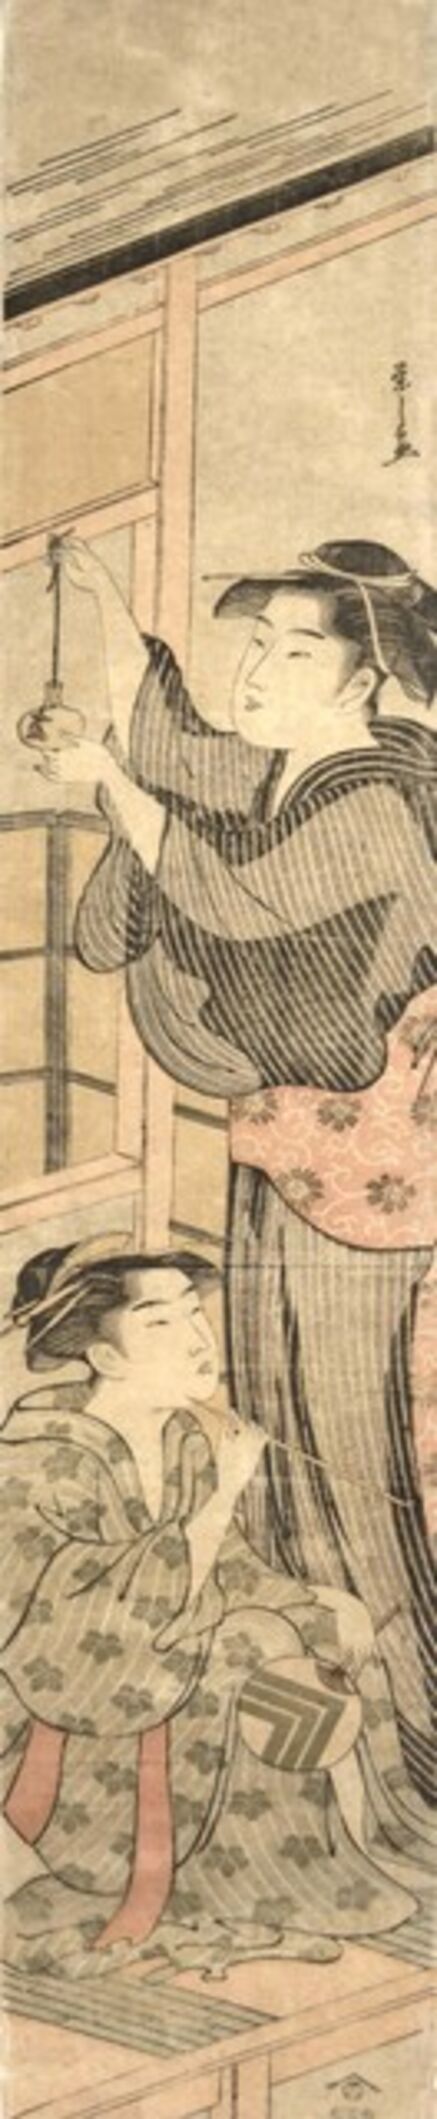 Hosoda Eishi, ‘Bijin in a Summer Kimono Holding a Goldfish Bowl’, ca. 1790